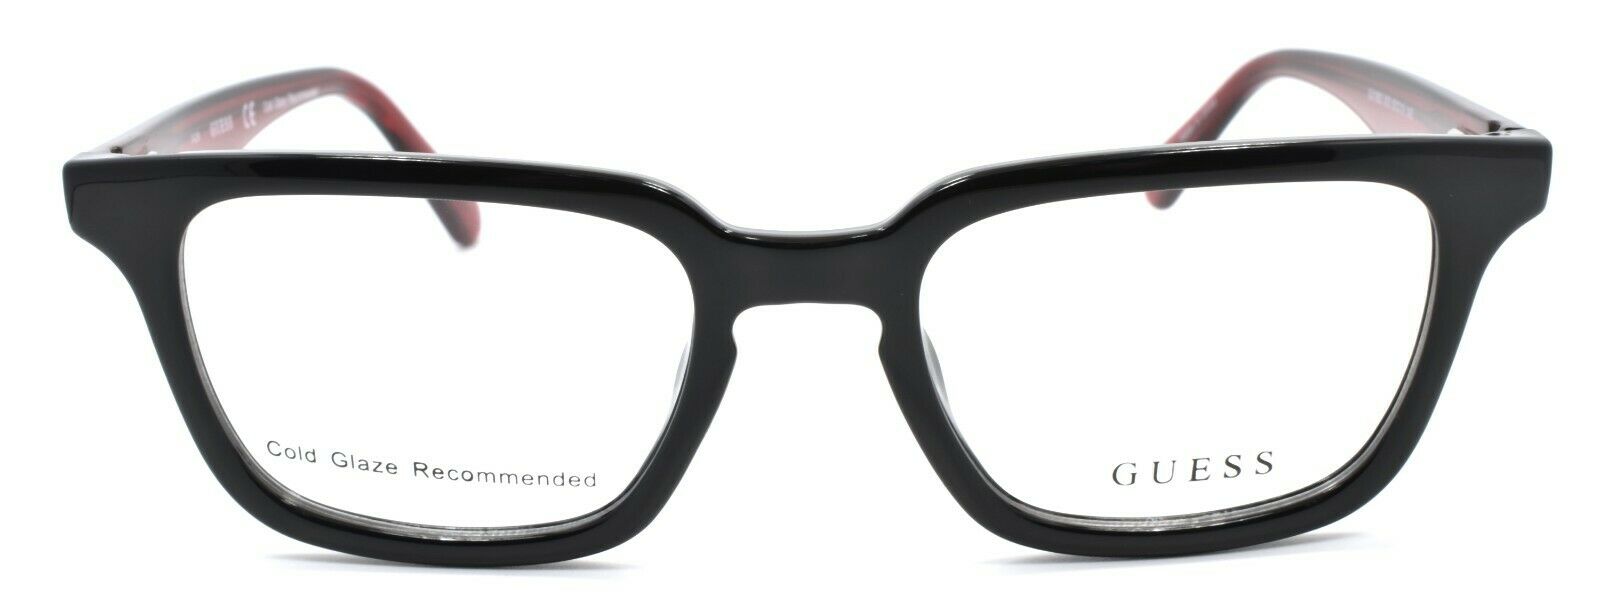 2-GUESS GU1962 005 Men's Eyeglasses Frames 50-19-145 Black / Red-889214033970-IKSpecs